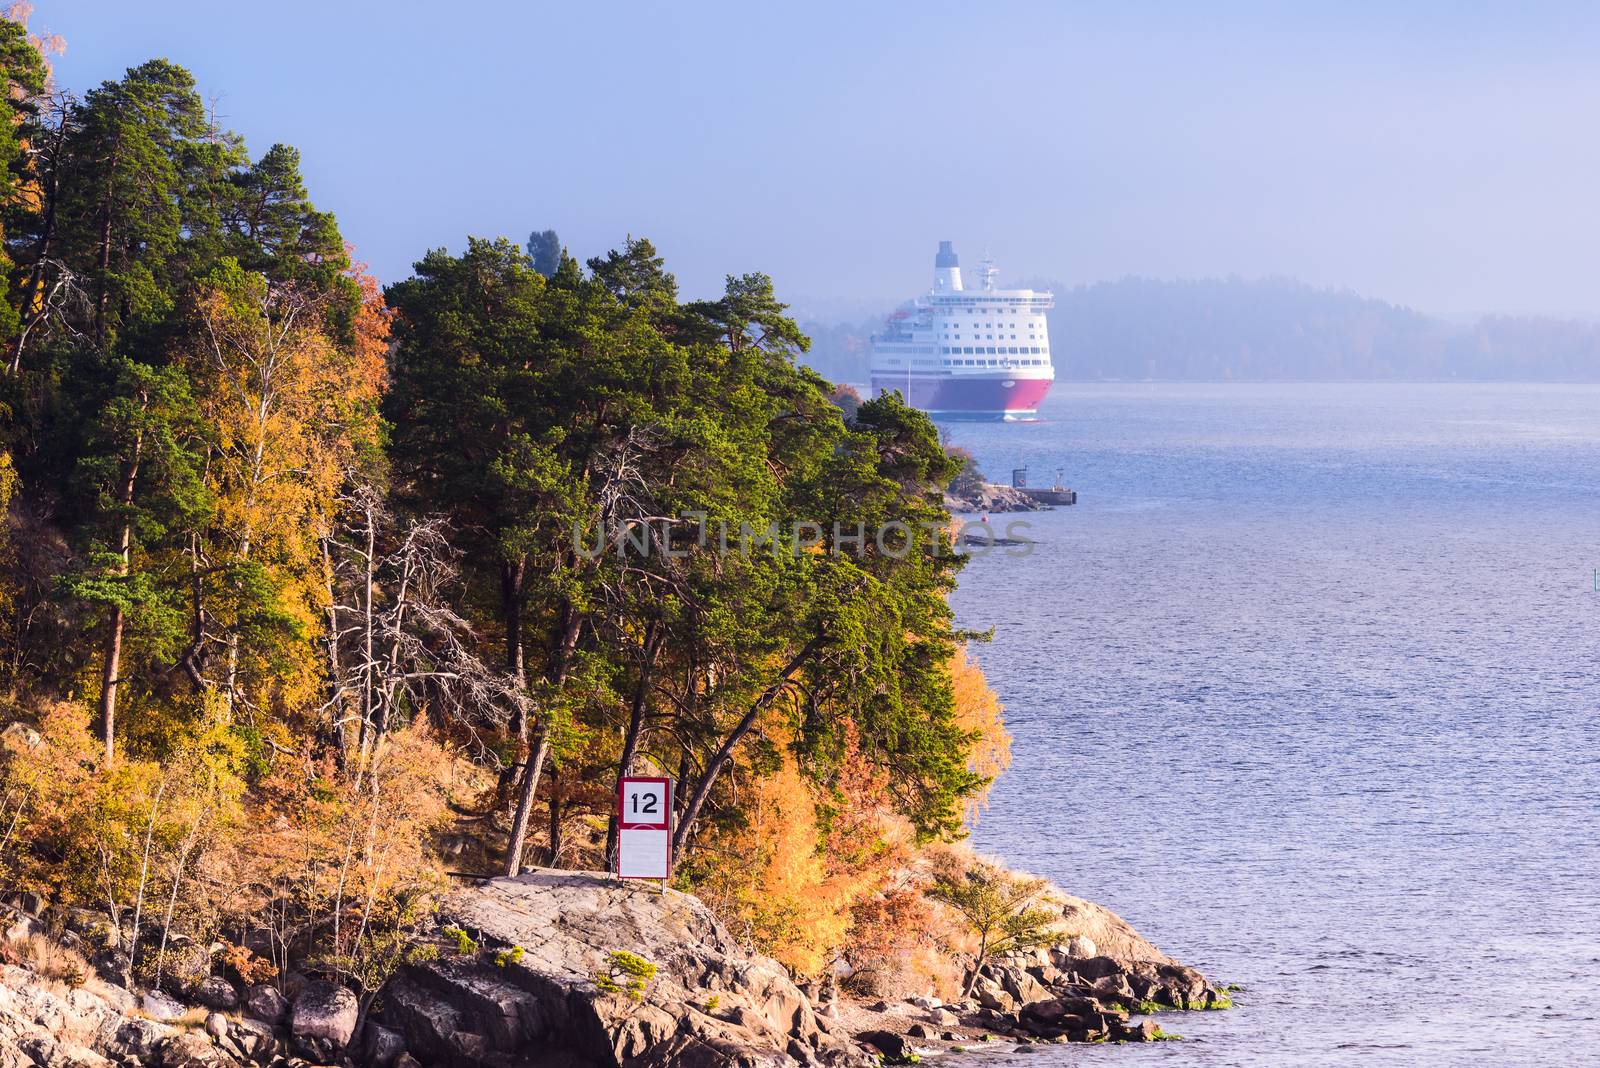 Landscape of Swedish sea fjord and cruise ship